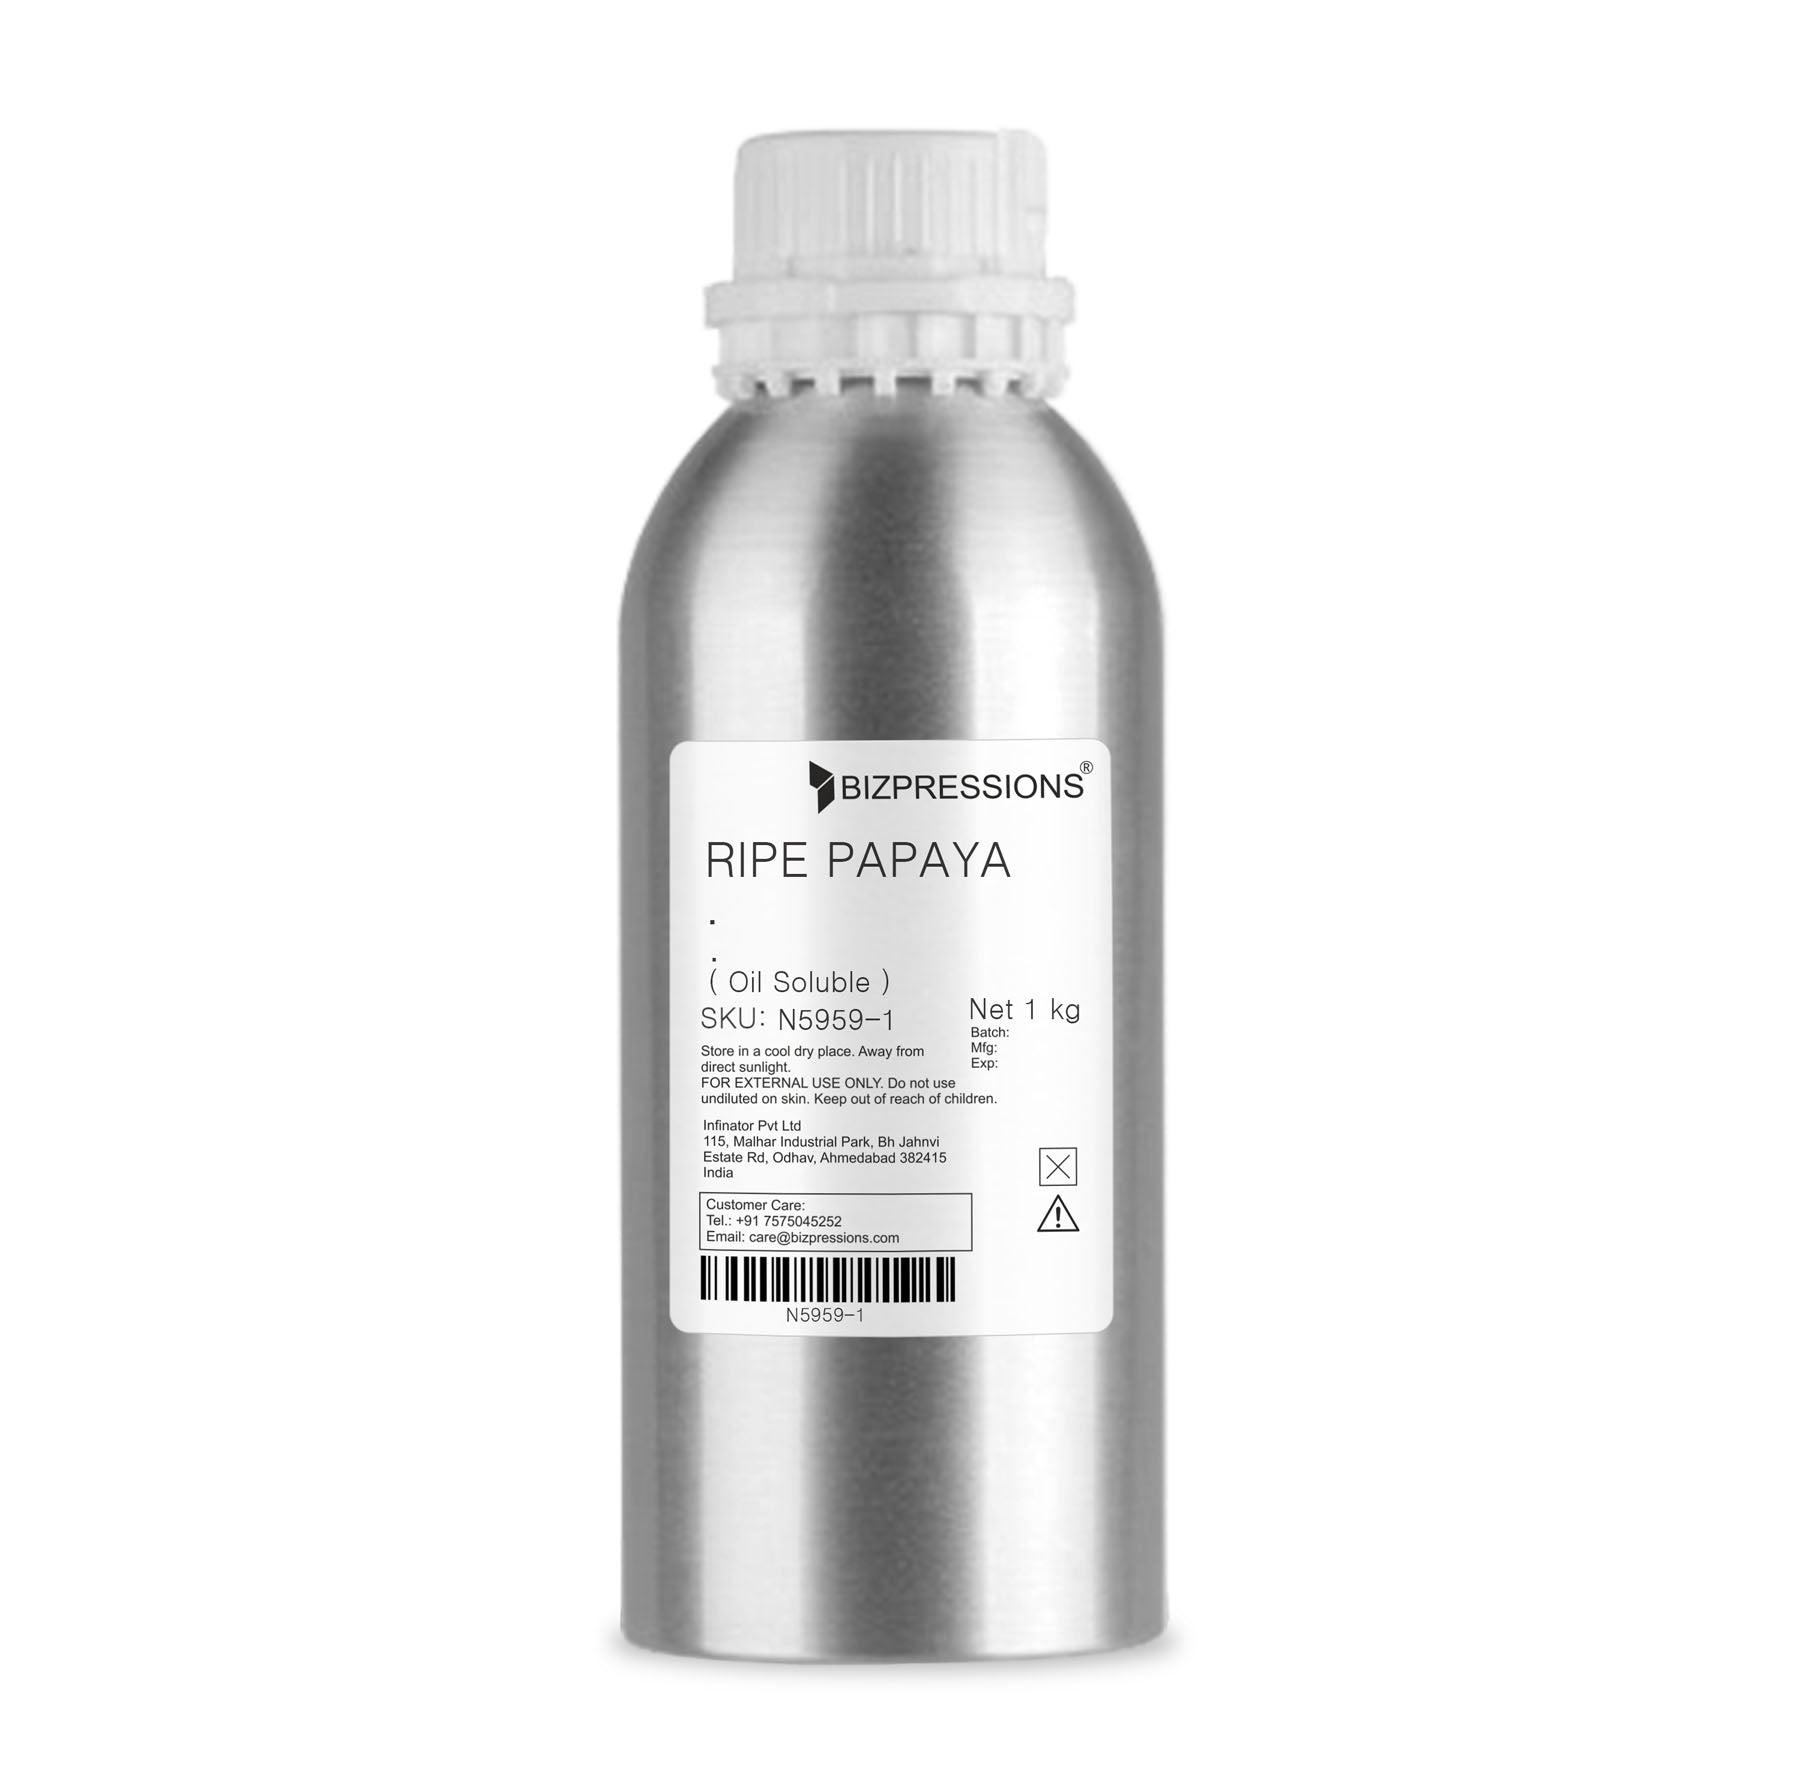 RIPE PAPAYA - Fragrance ( Oil Soluble ) - 1 kg